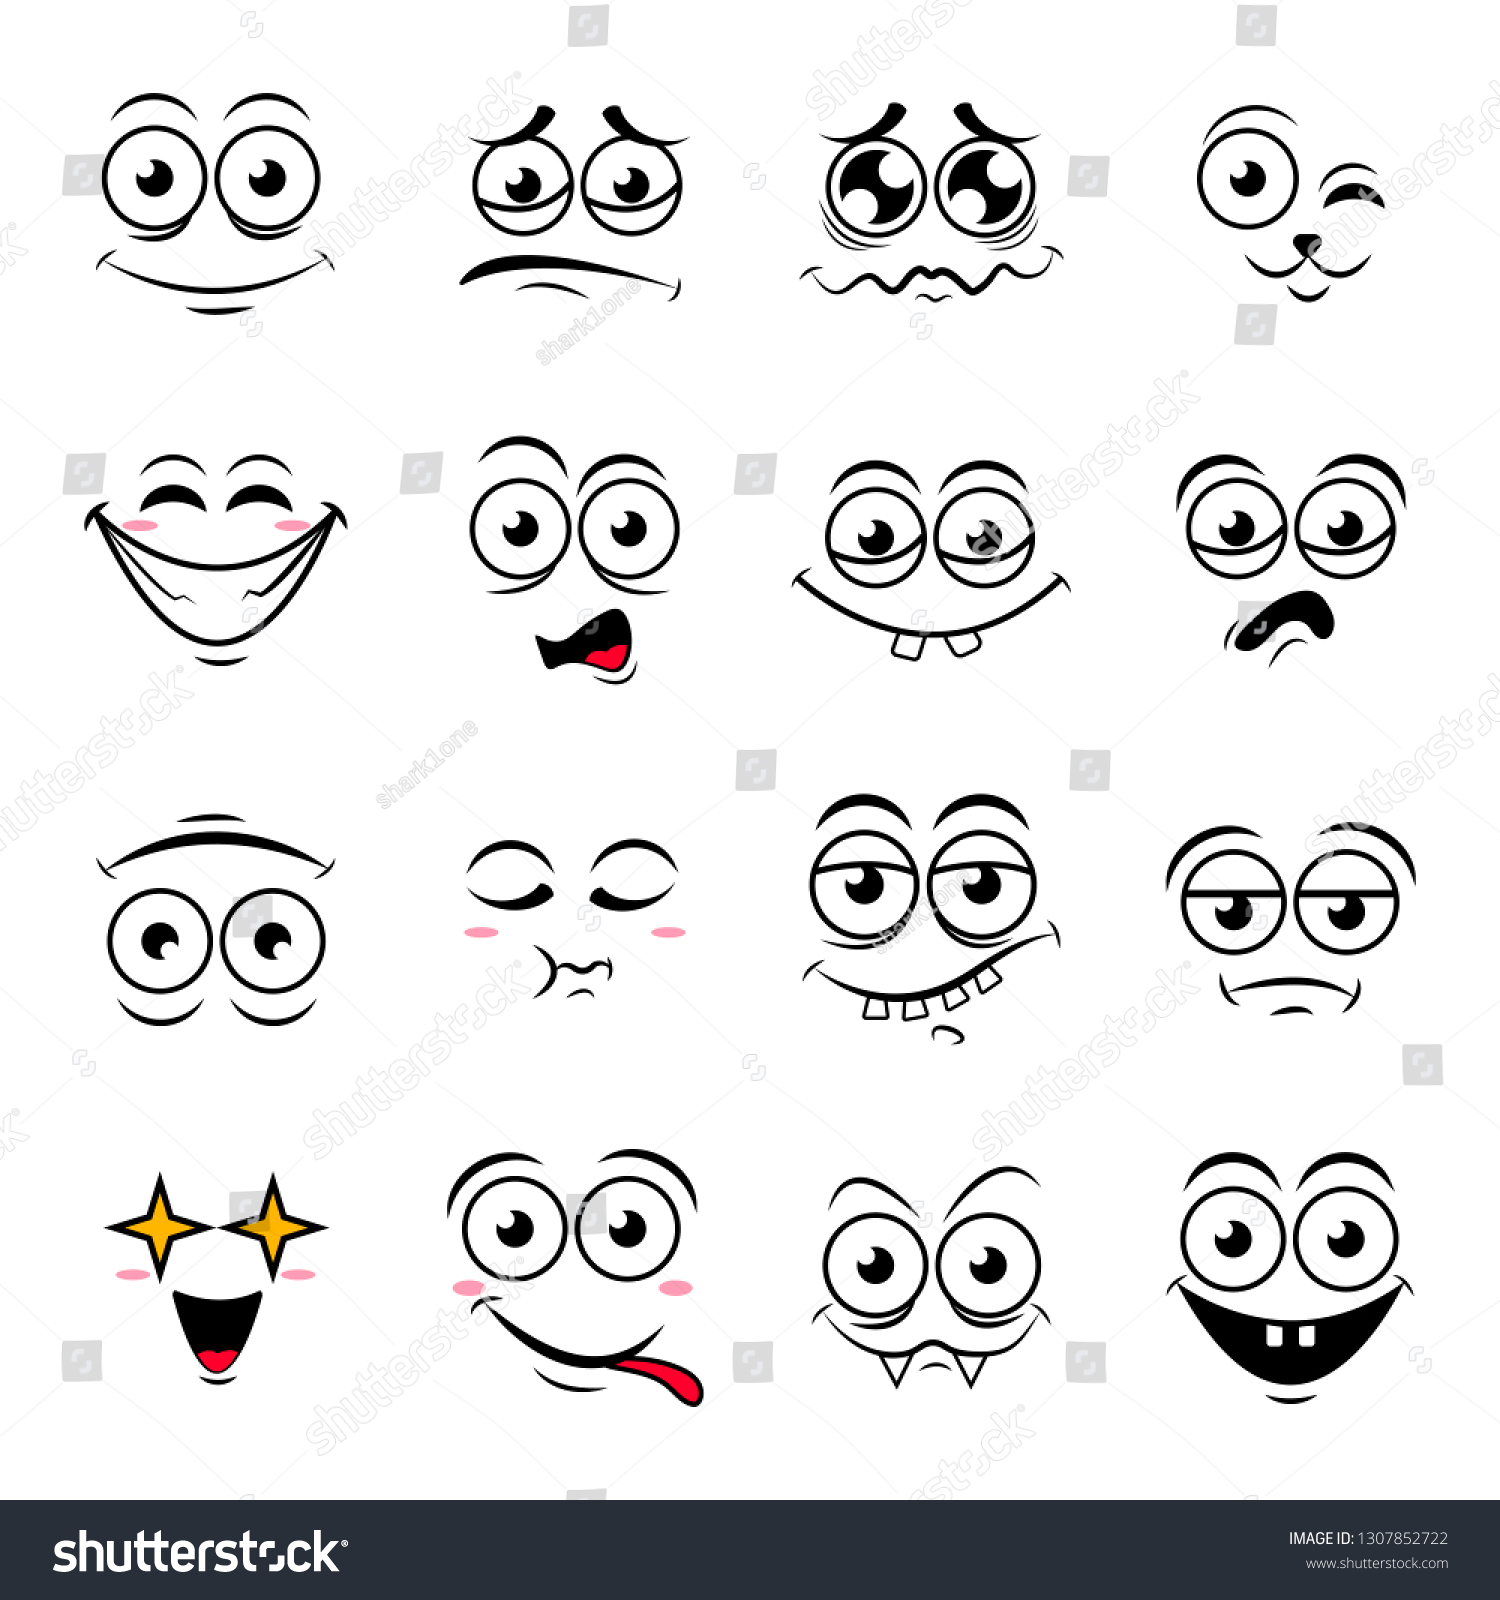 Happy symbol emotions icons vector illustration #1307852722